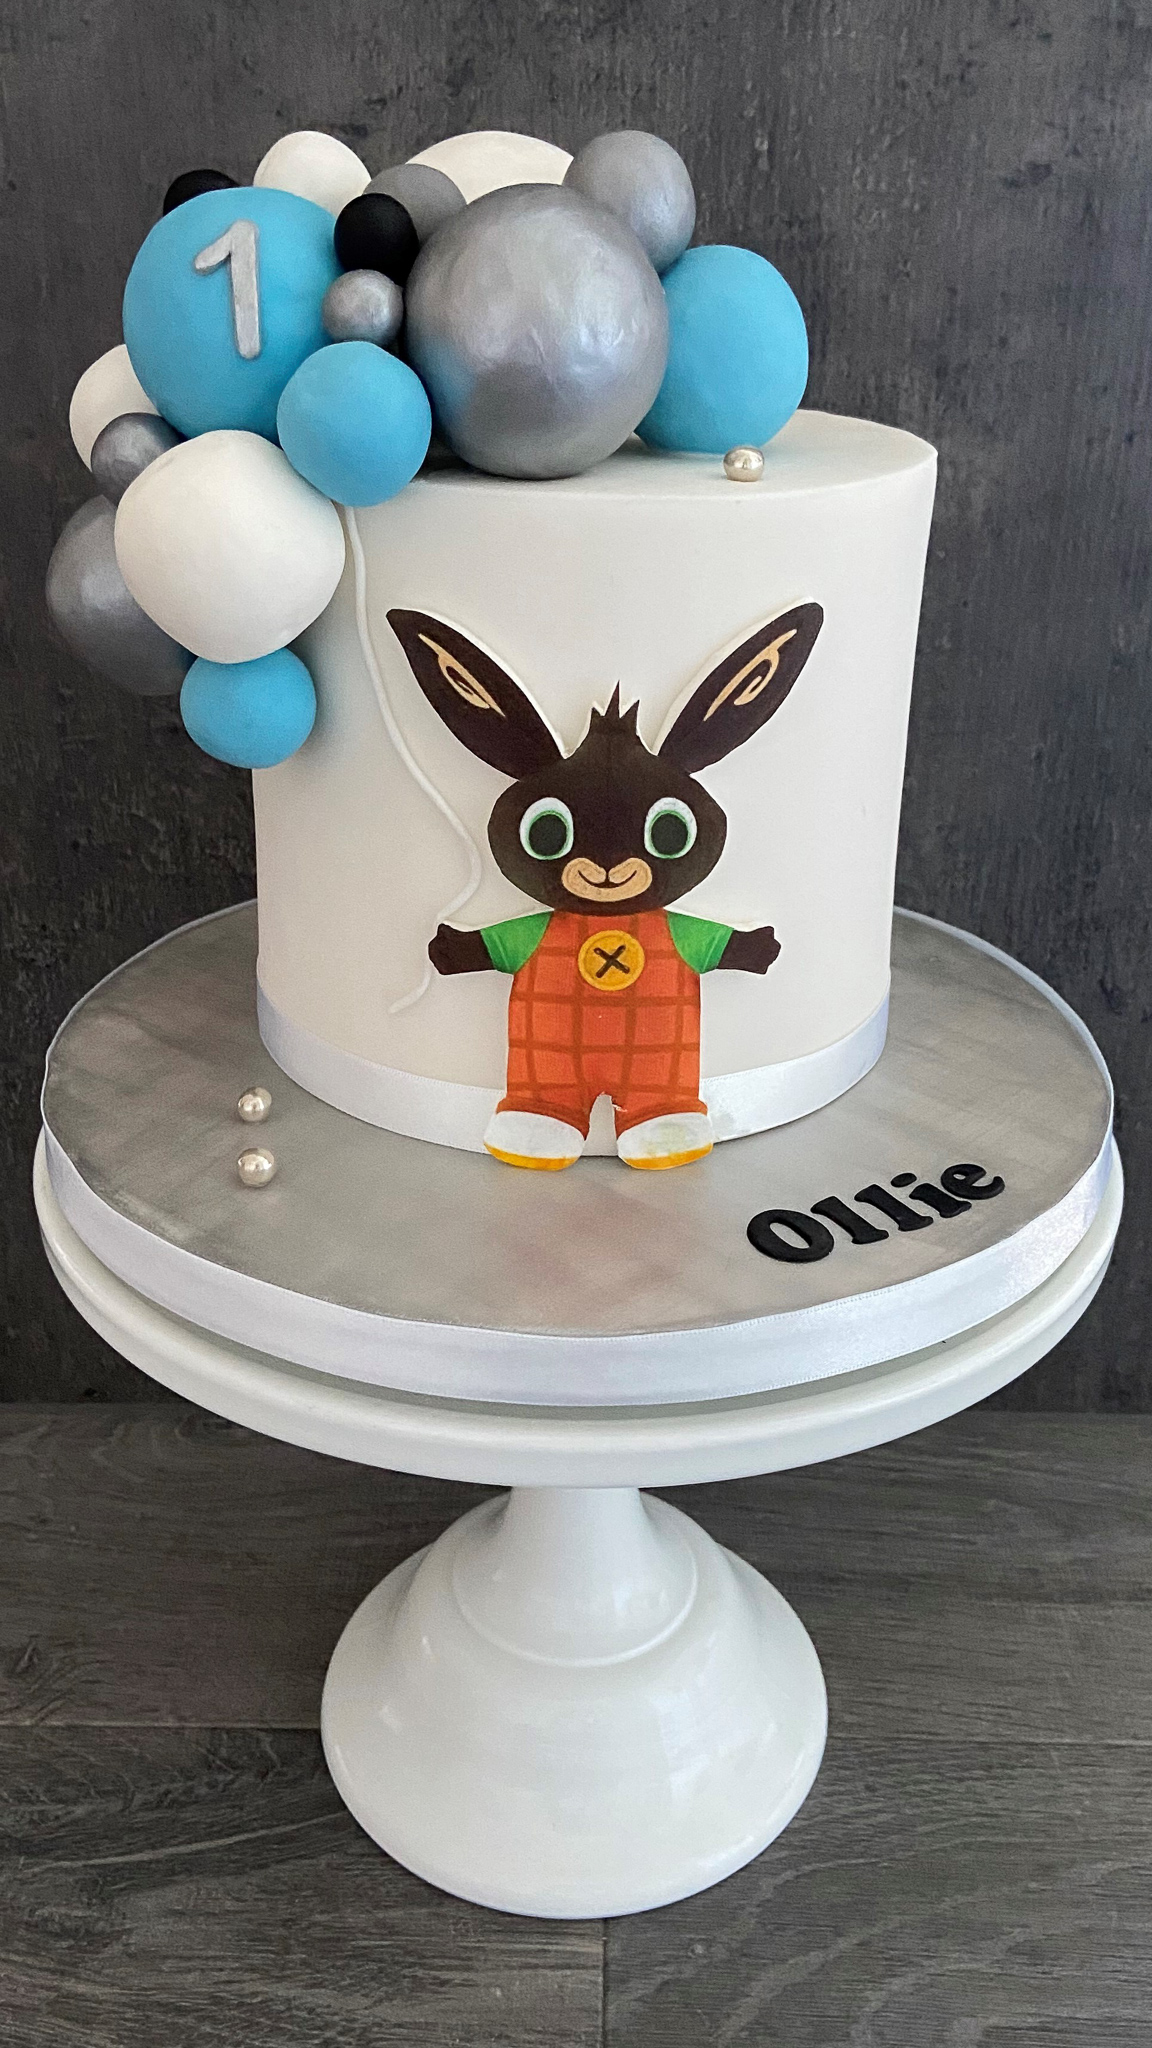 Bing in pasta di zucchero - YouTube | Bunny birthday, Tutorial, Bing cake